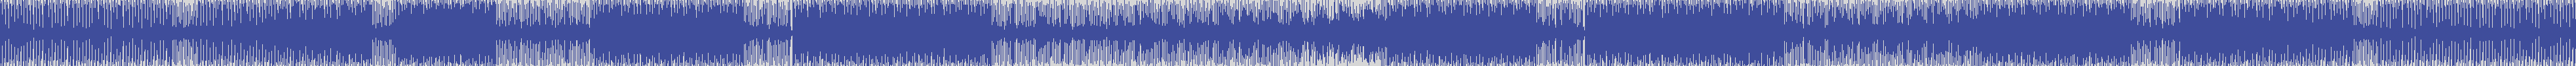 nonstop_one [NSO006] Max Chapman, Gene Farris - Three O Three [Original Mix] audio wave form